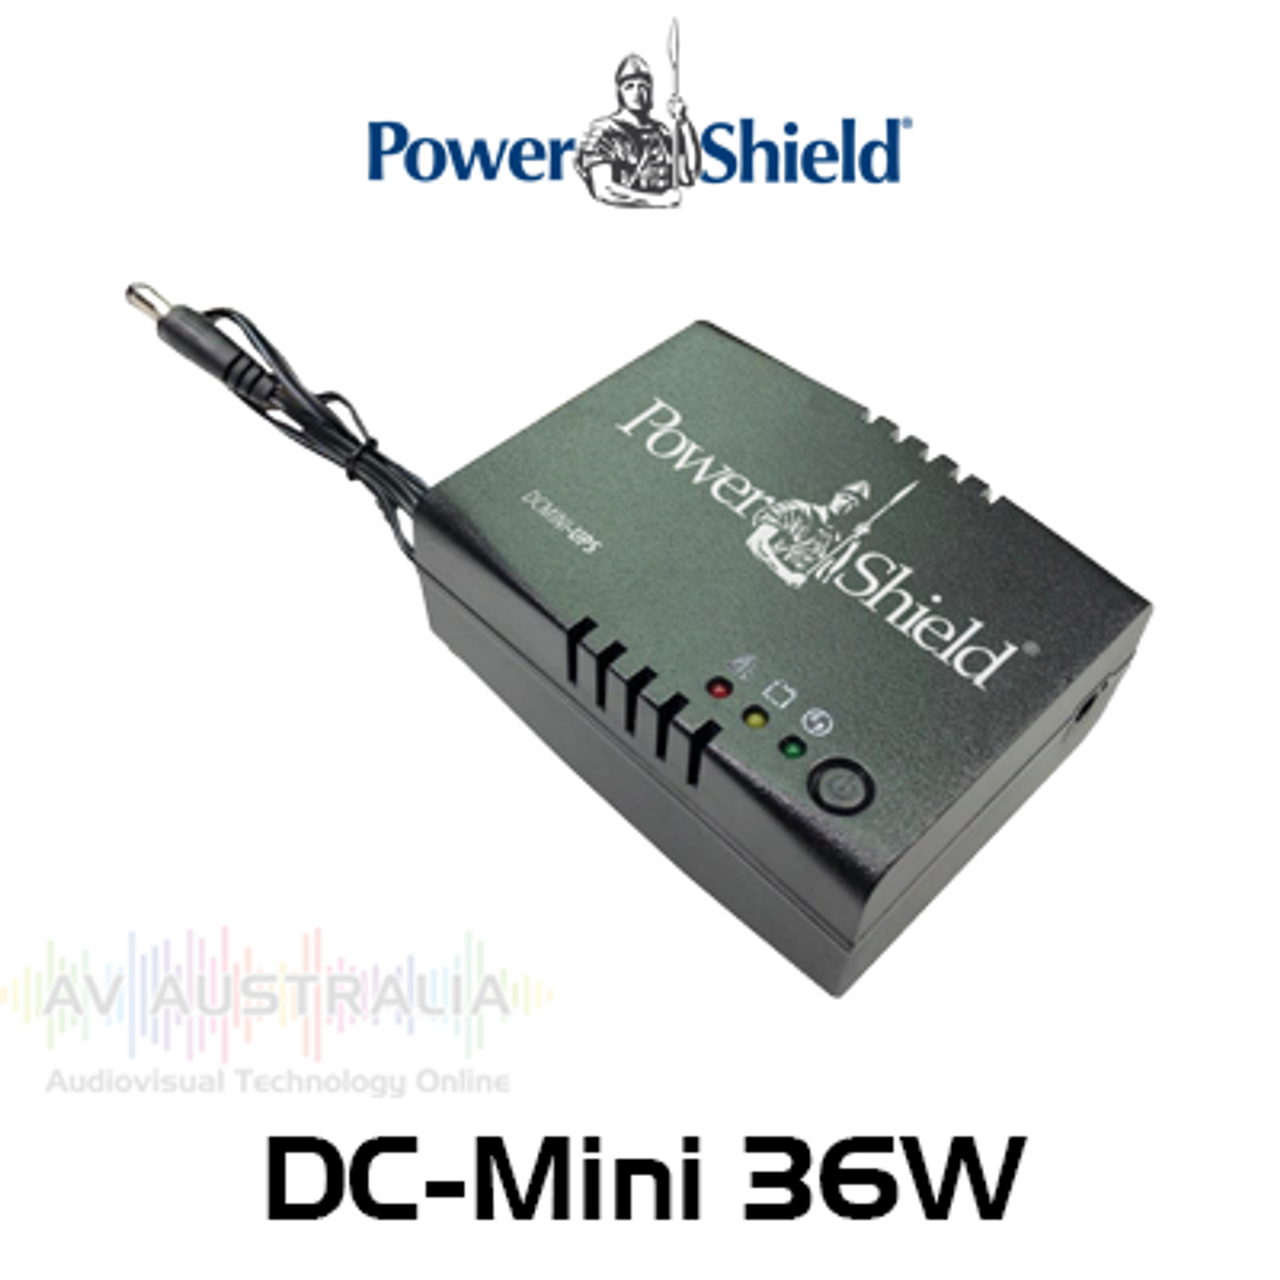 PowerShield DC-Mini 36W 12-24V DC UPS